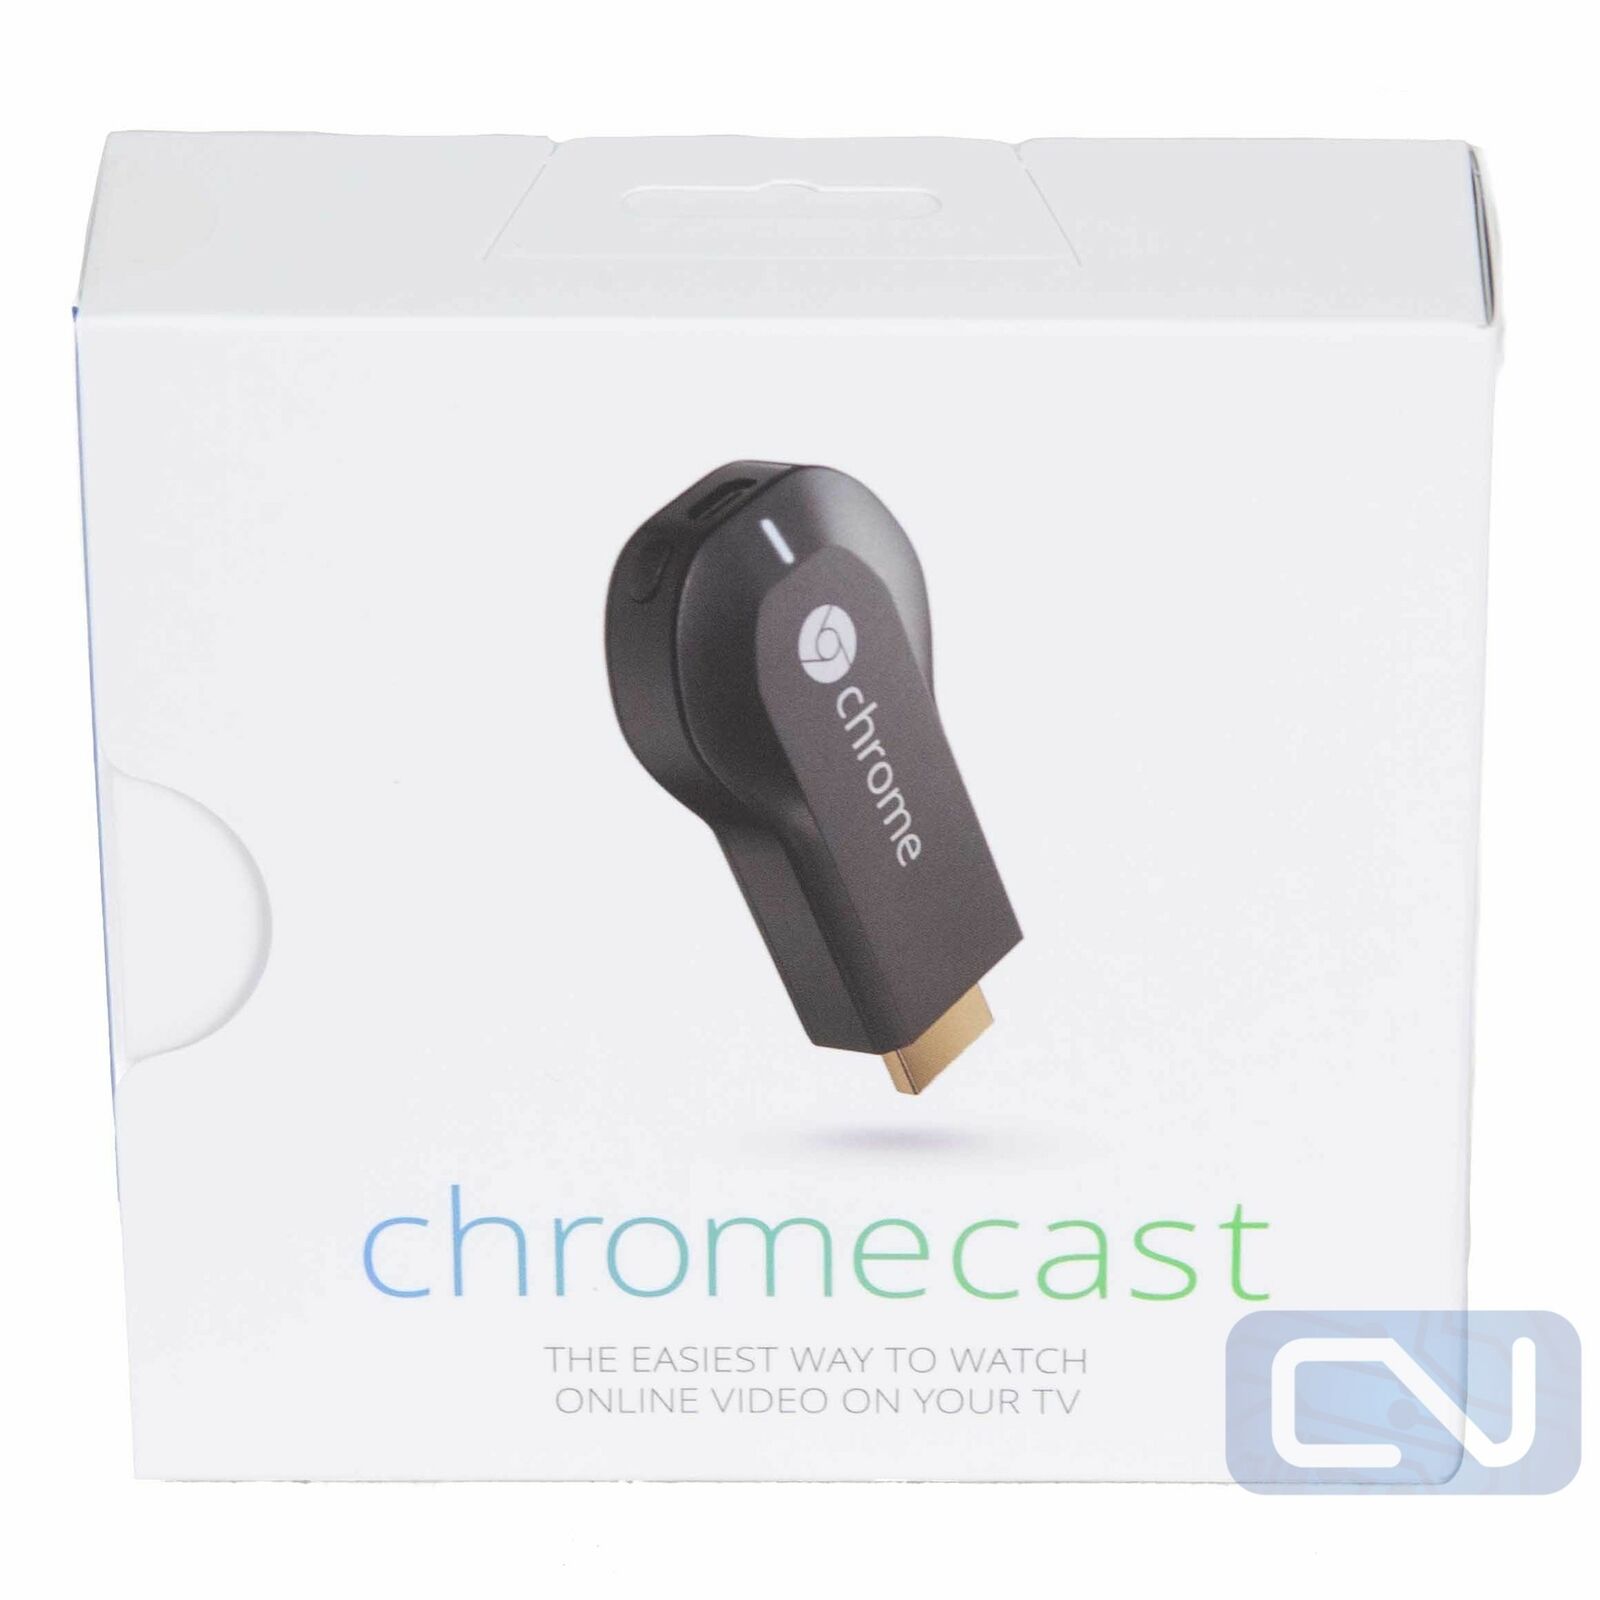 New Google H2g2-42 Chromecast 1st Gen Hdmi Streamer Black Disney Amazon Netflix